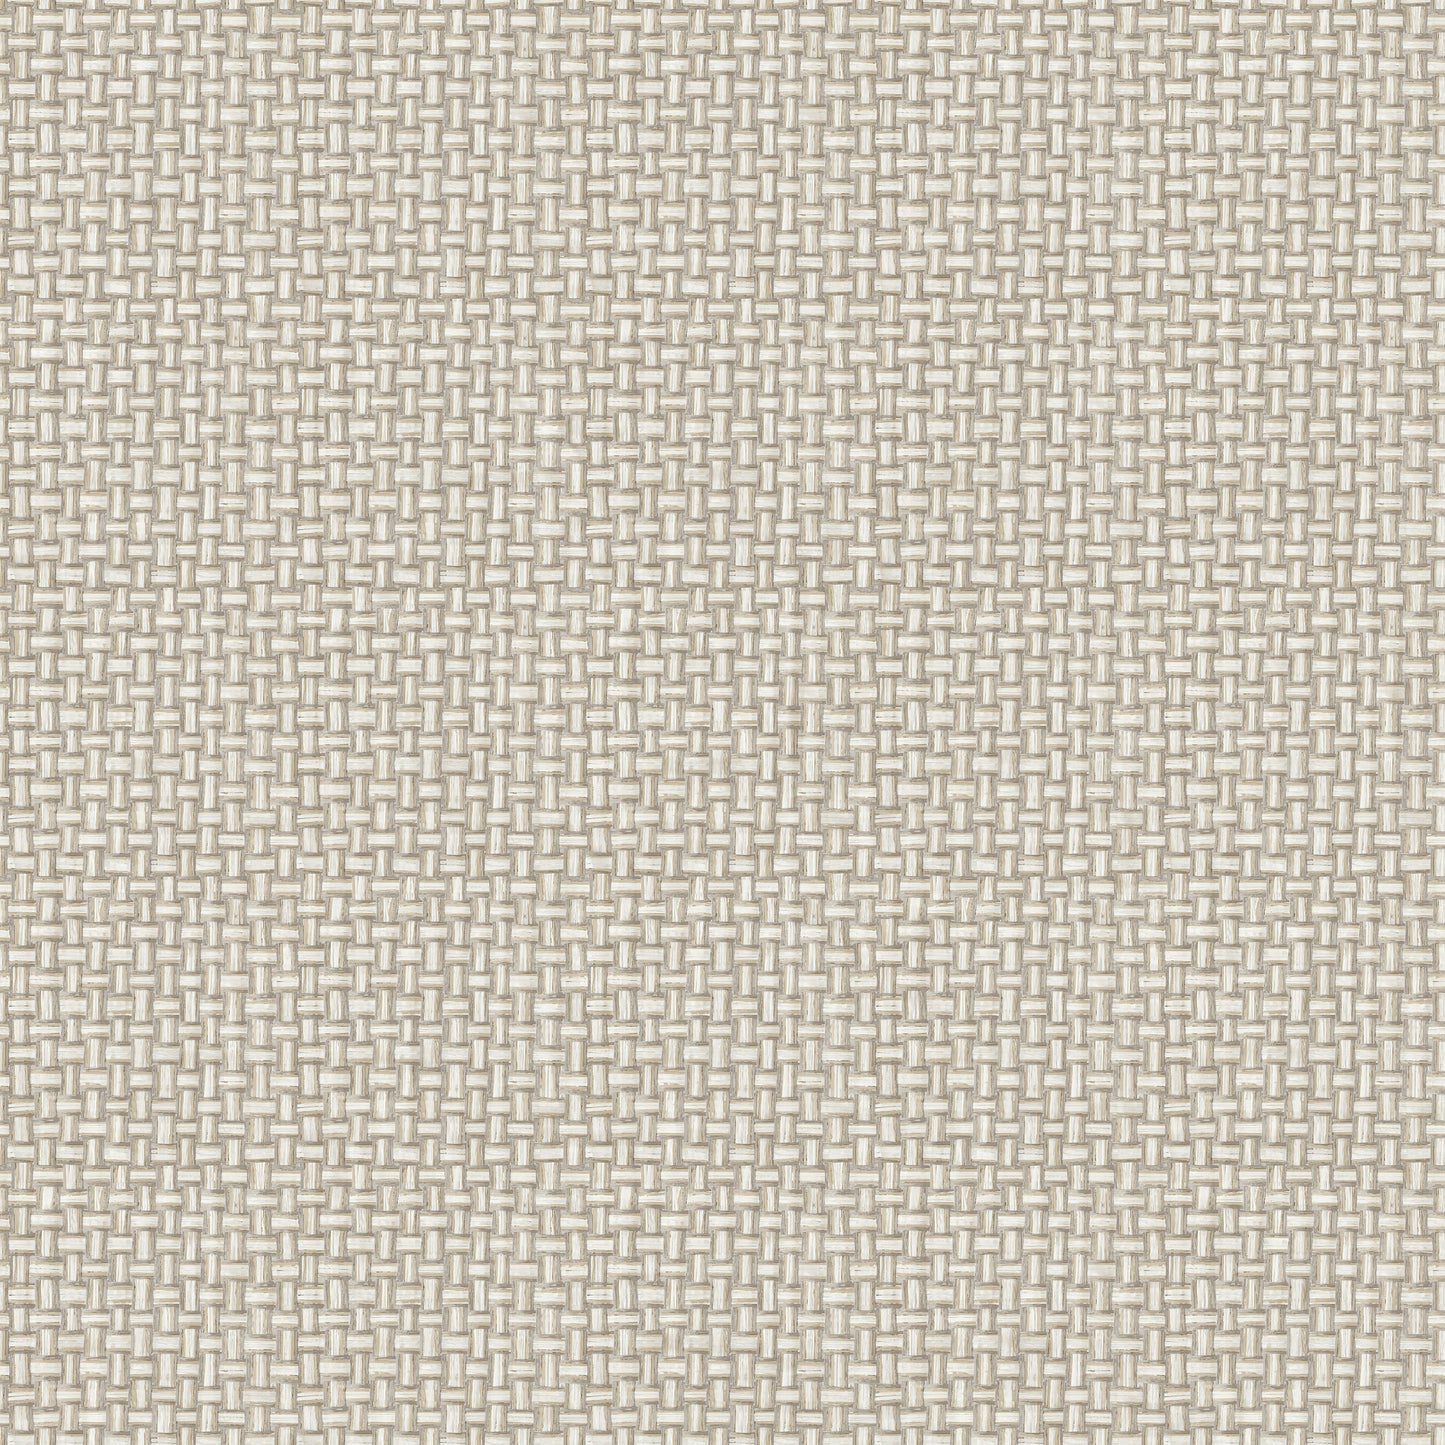 Holden Basket Weave Cream Wallpaper (13580)